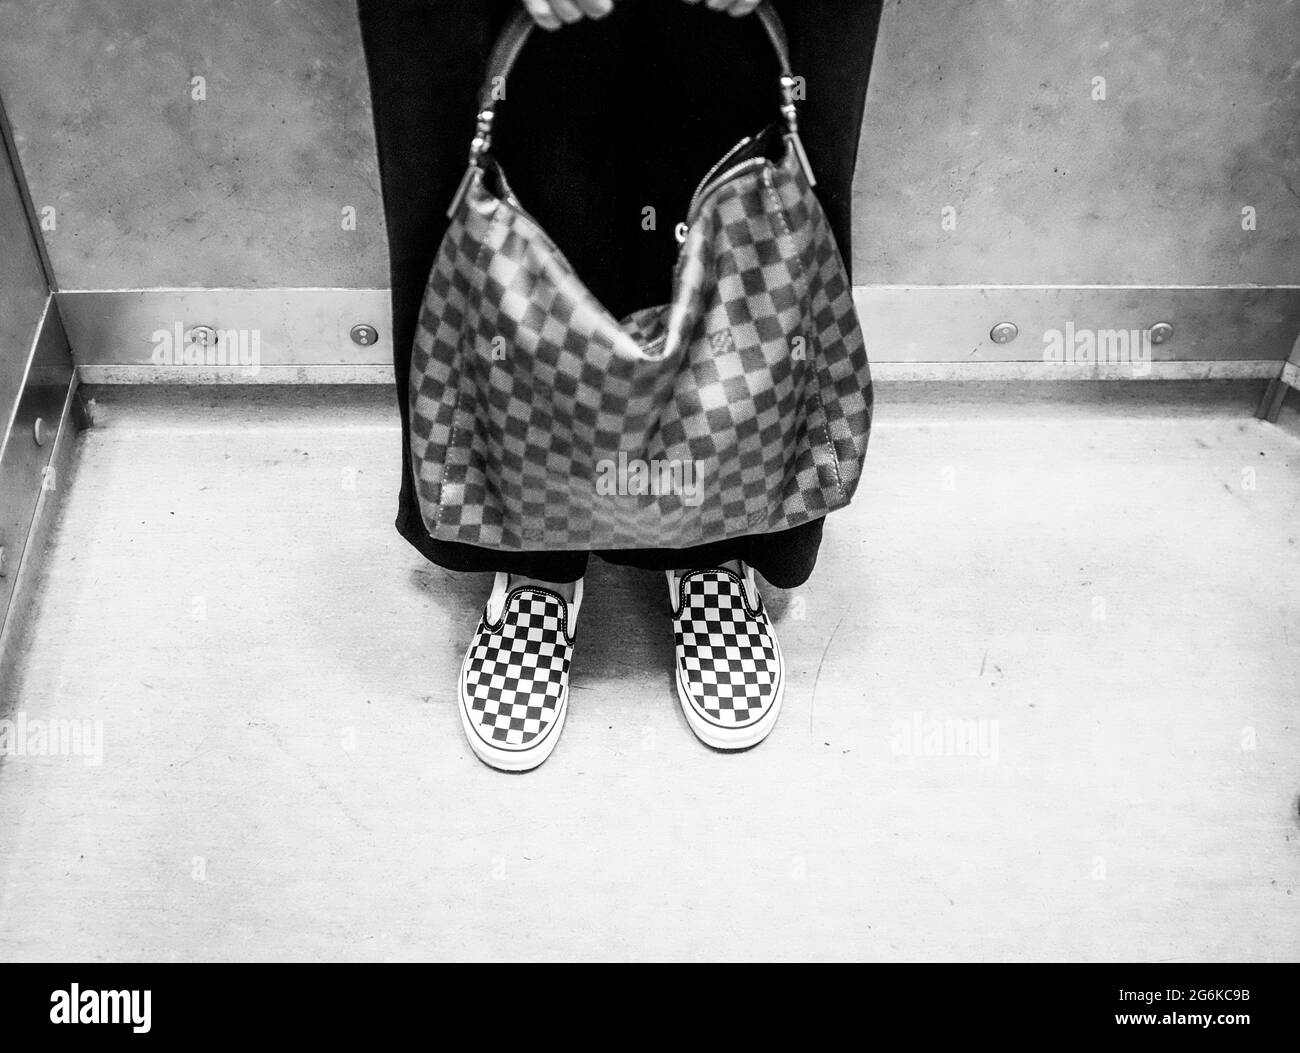 Louis vuitton bag Black and White Stock Photos & Images - Alamy